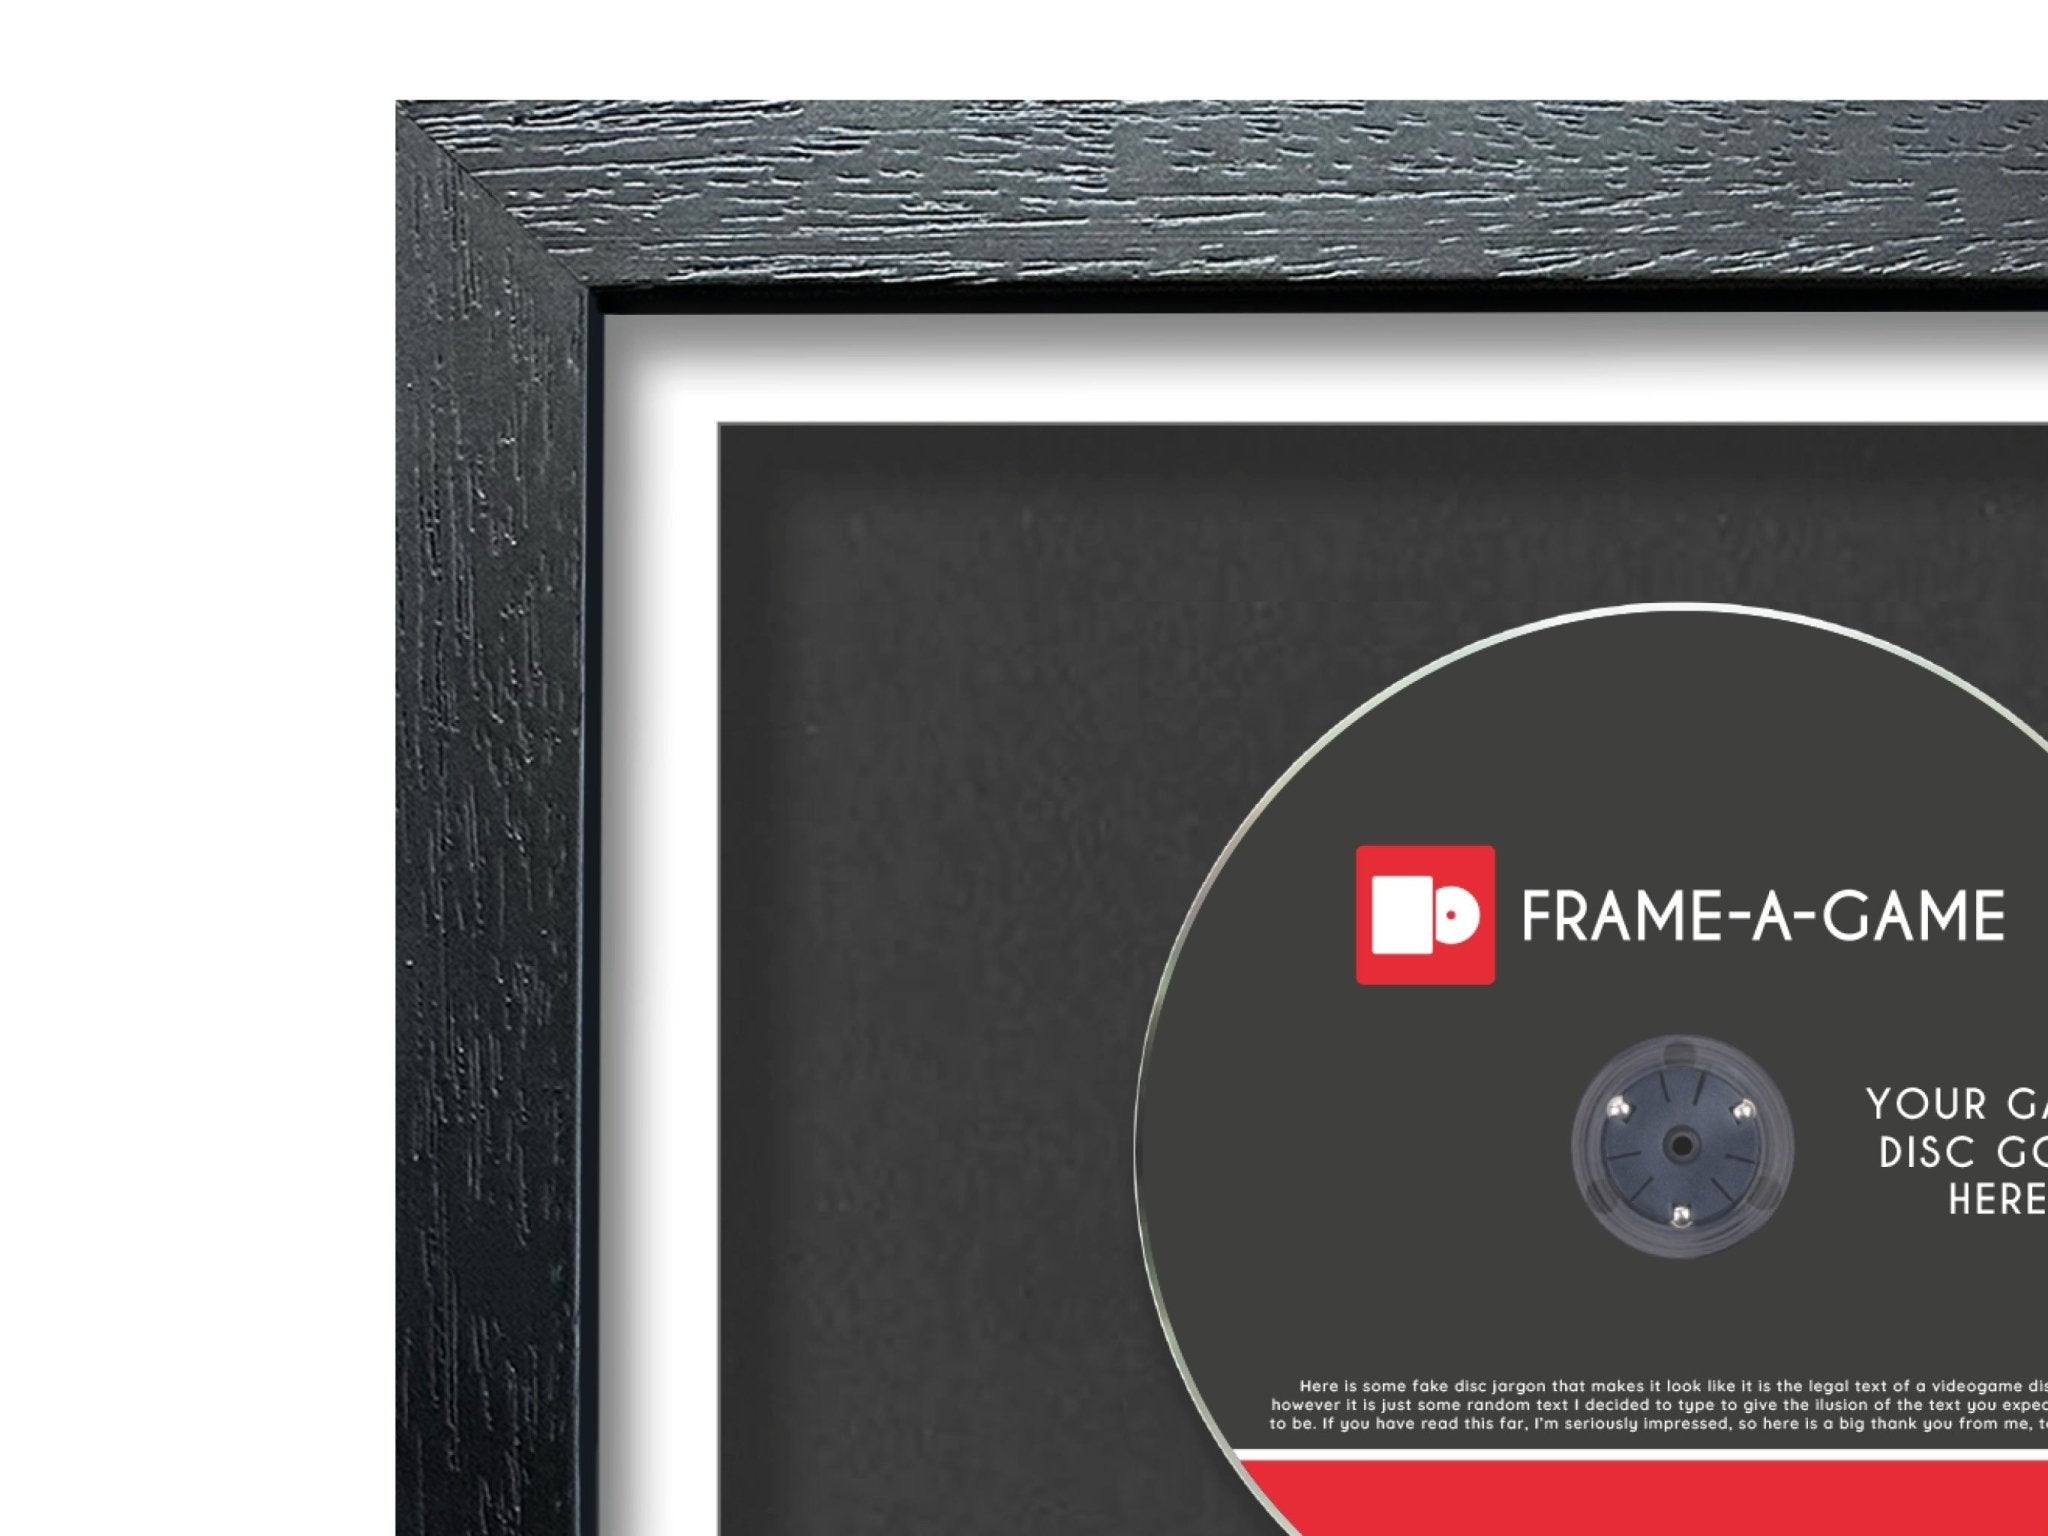 Horizon (Duo Range) Framed Games - Frame-A-Game